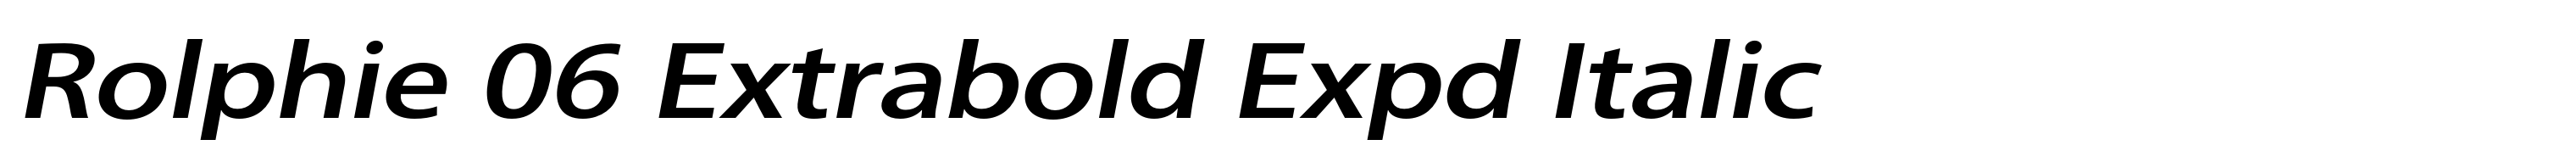 Rolphie 06 Extrabold Expd Italic